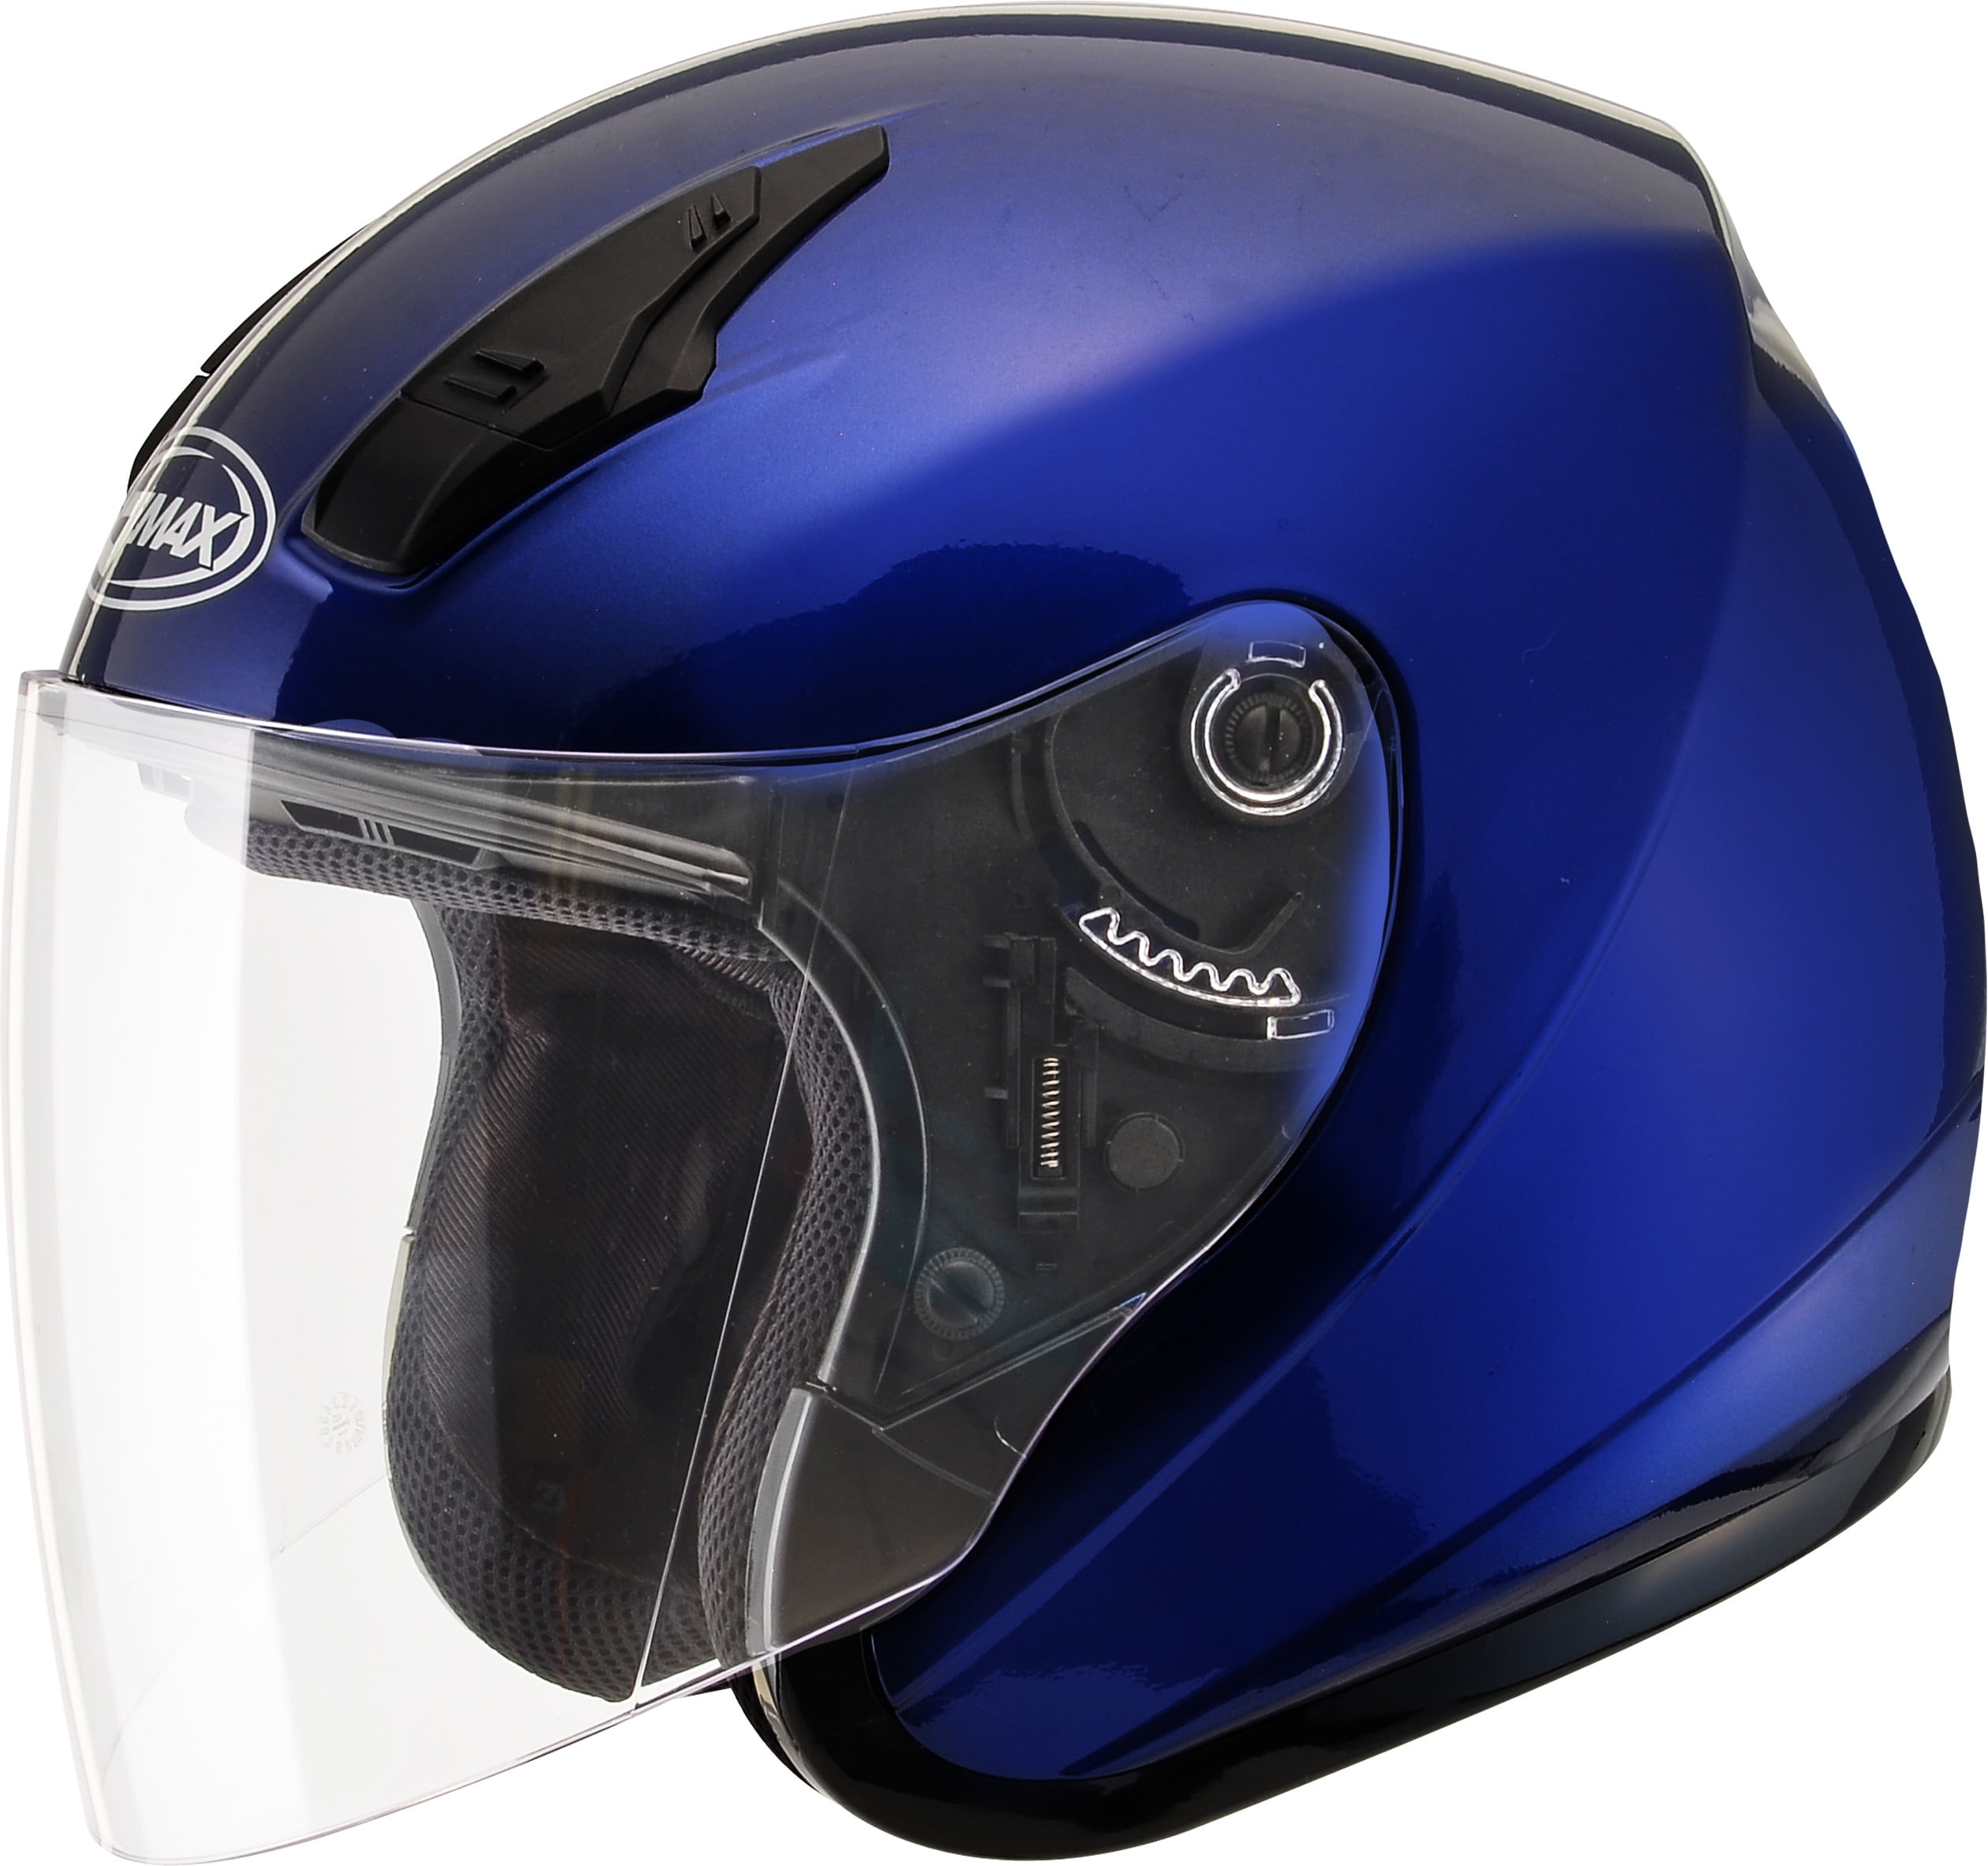 GMAX OF-17 Open Face Motorcycle/Scooter Helmet Blue - Walmart.com - Walmart.com